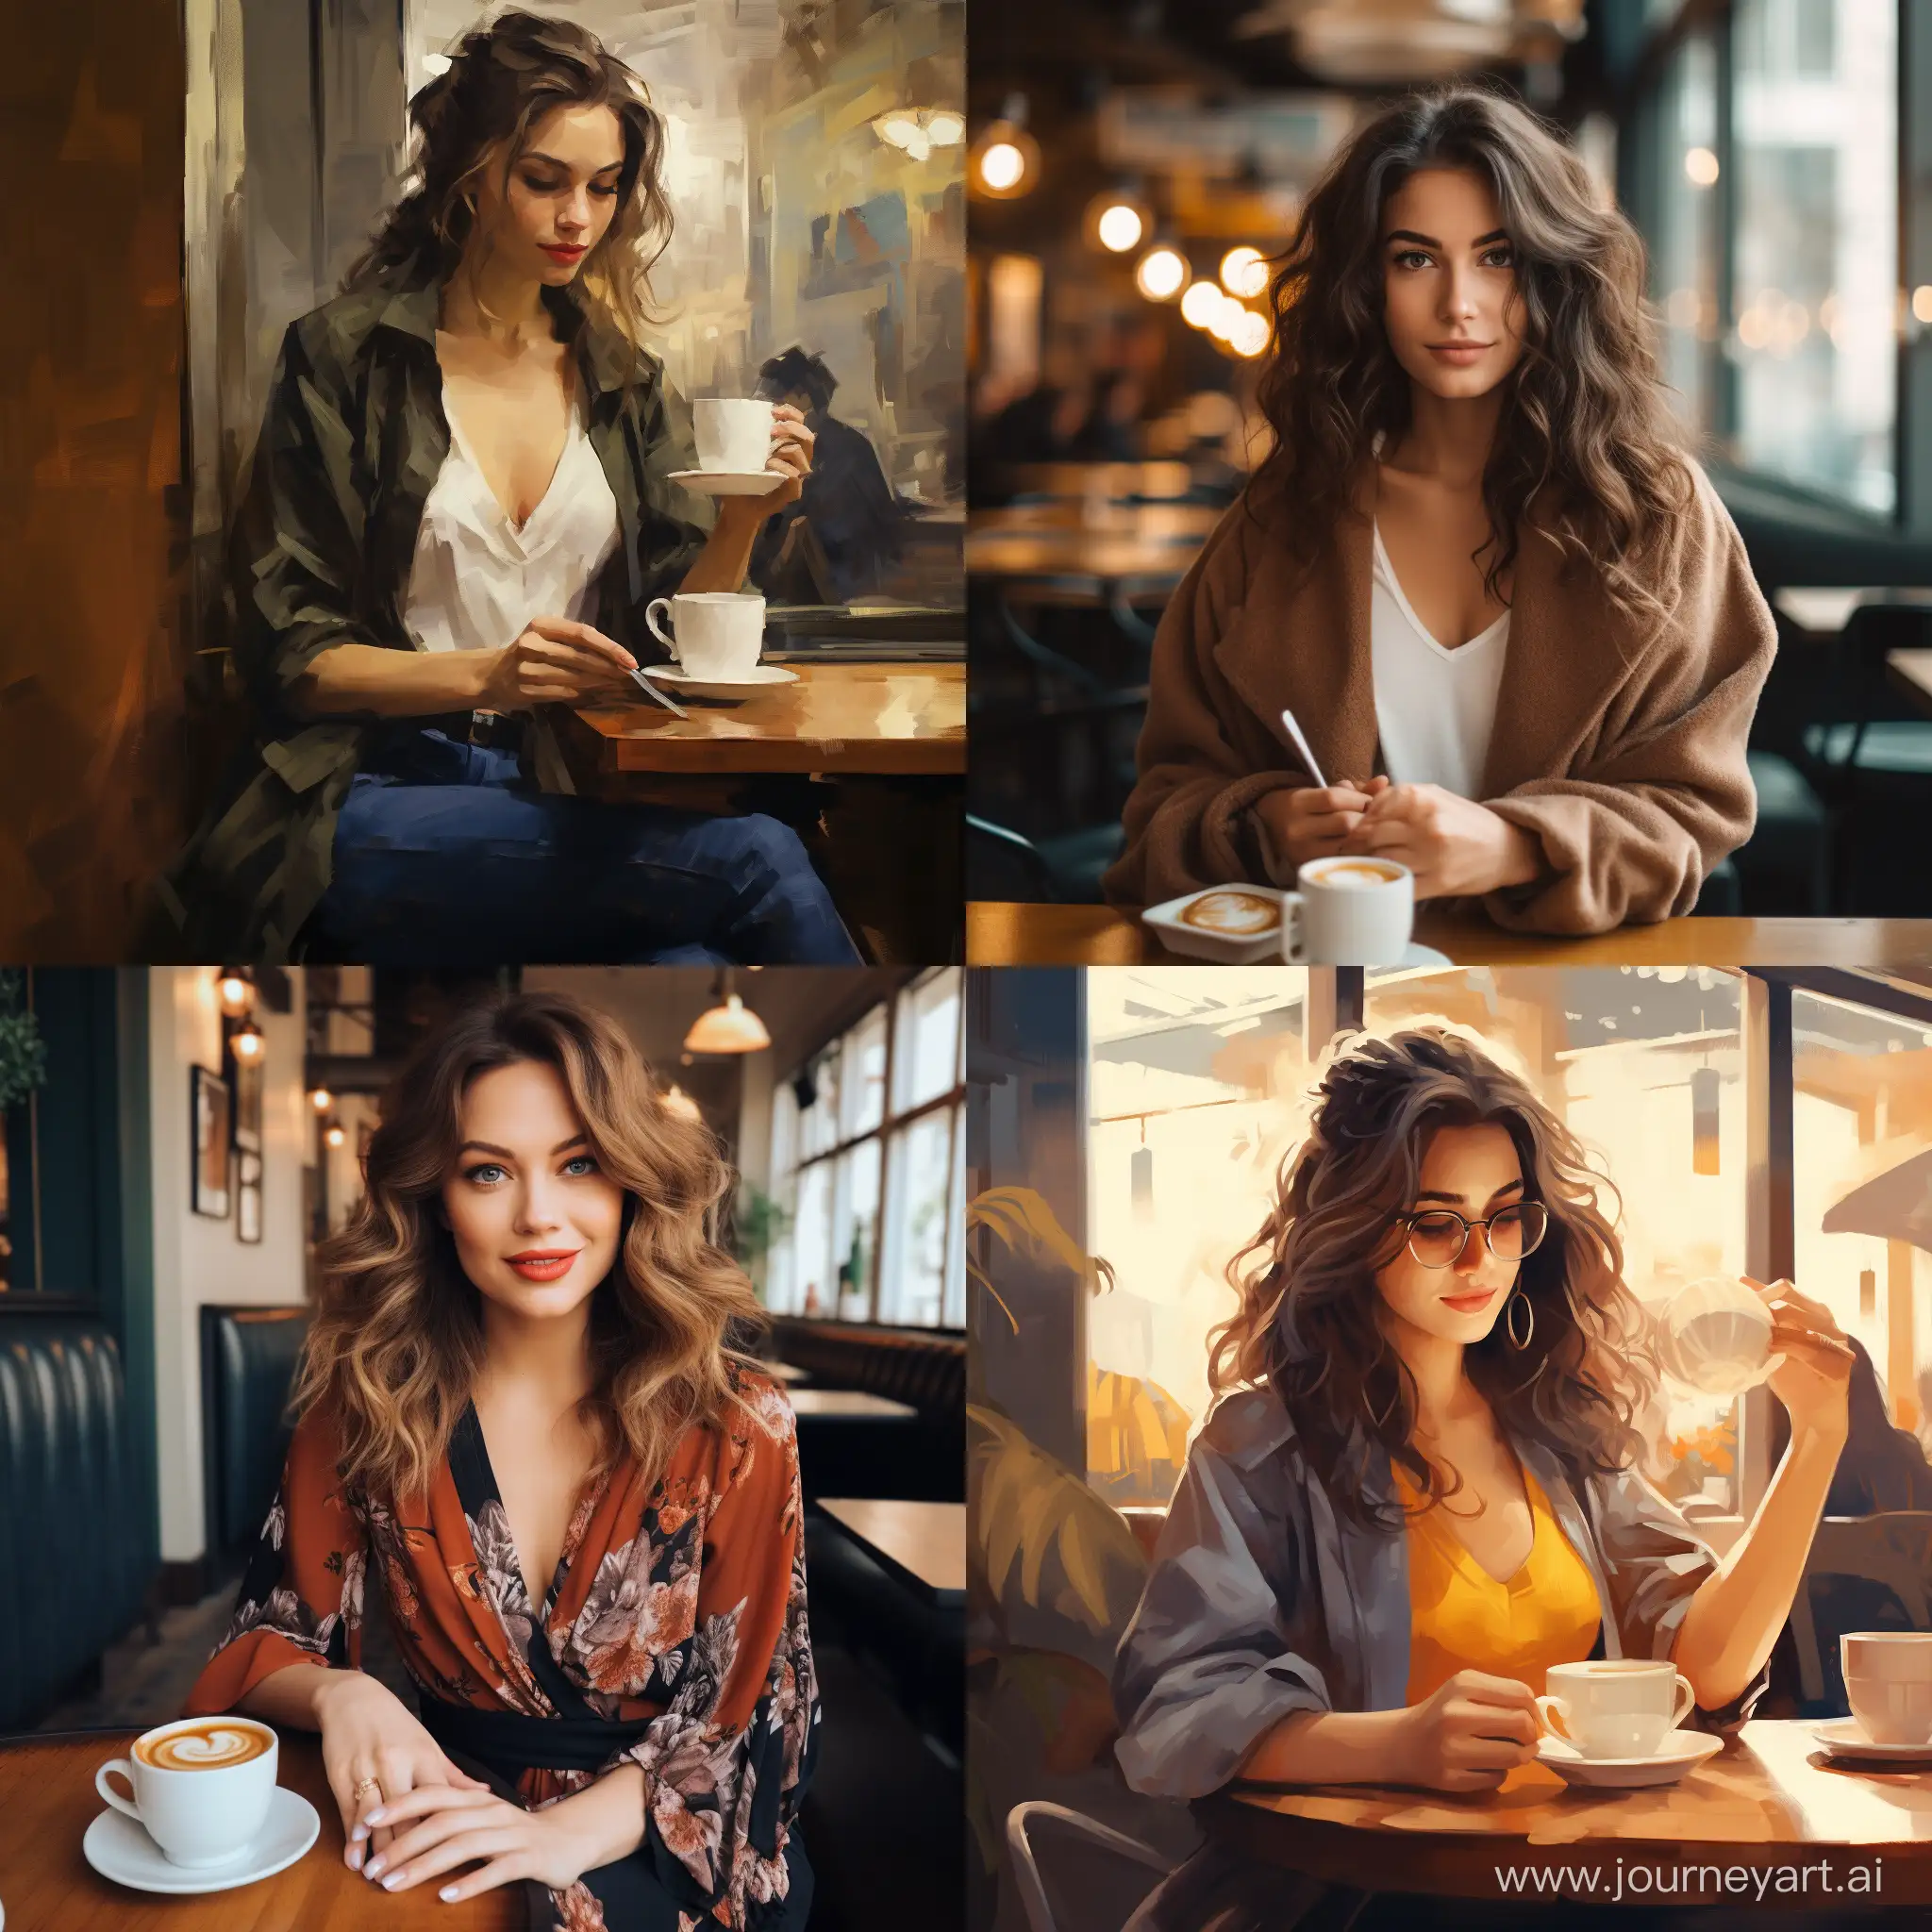 Woman-Enjoying-Coffee-in-a-Cozy-Cafe-Setting